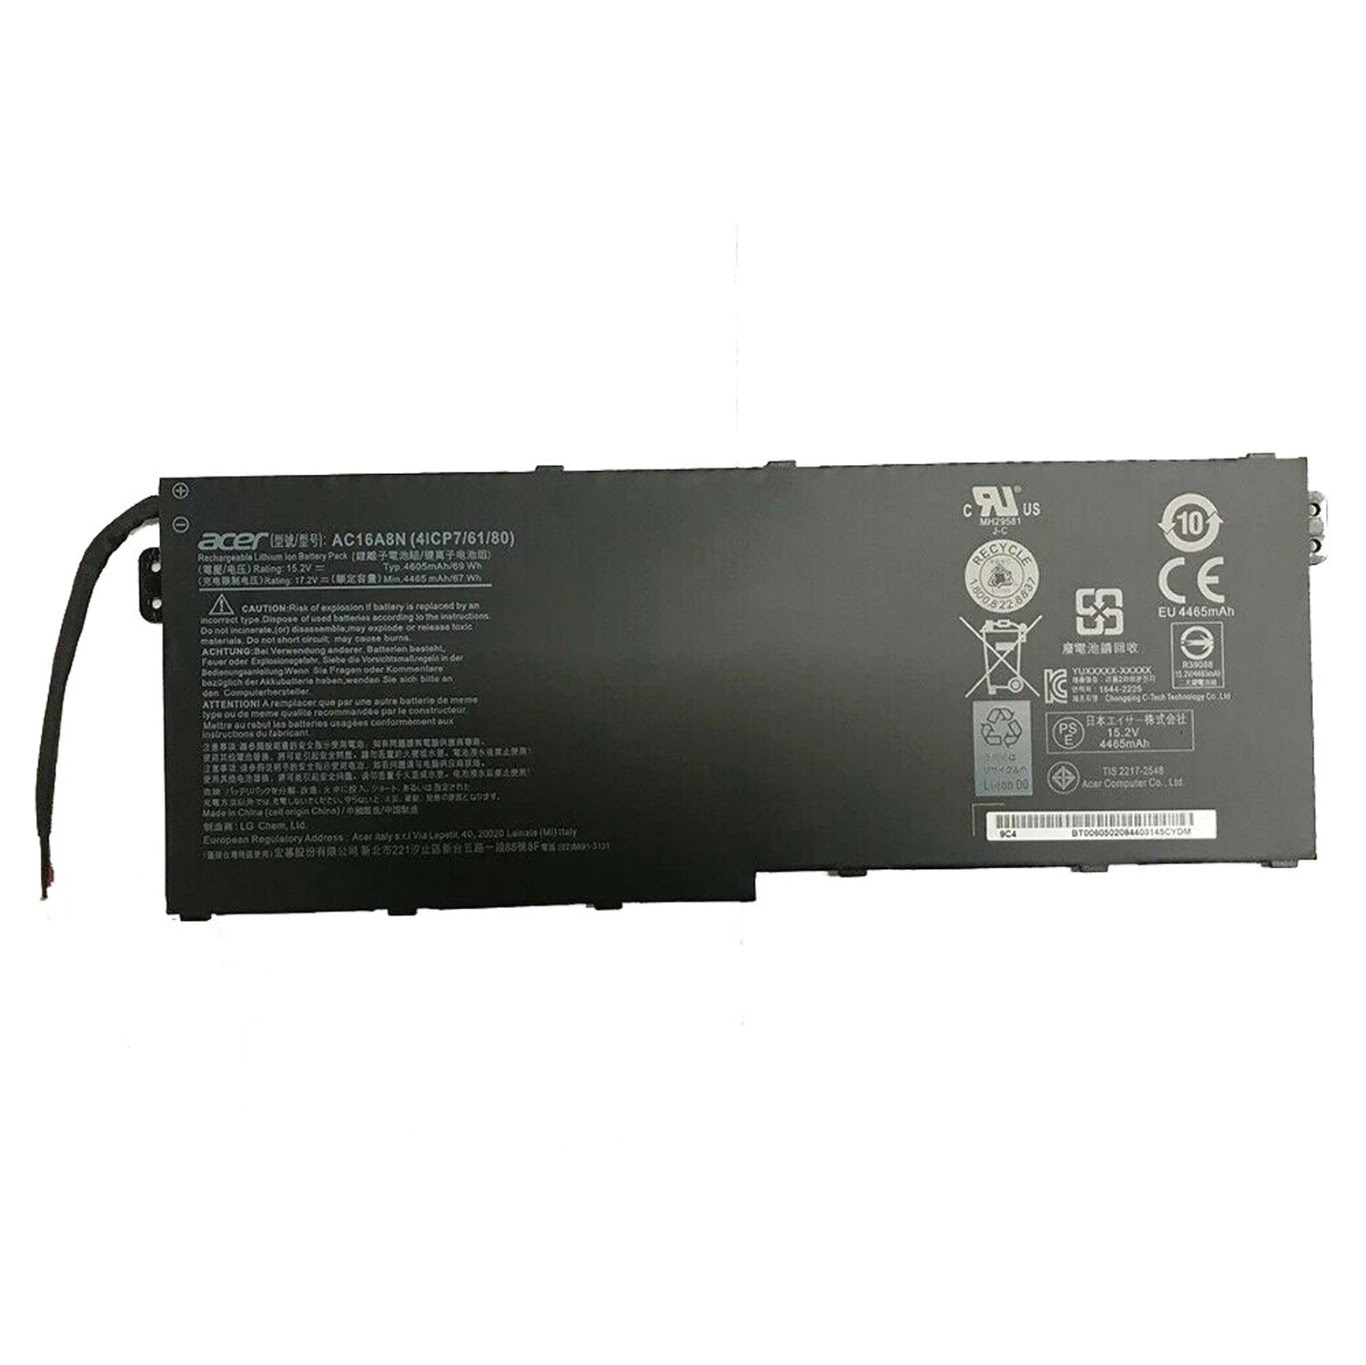 4ICP7/61/80, AC16A8N replacement Laptop Battery for Acer Aspire Nitro V17 VN7-793G, Aspire Nitro VN7-593G, 15.2v, 4605mah / 69wh